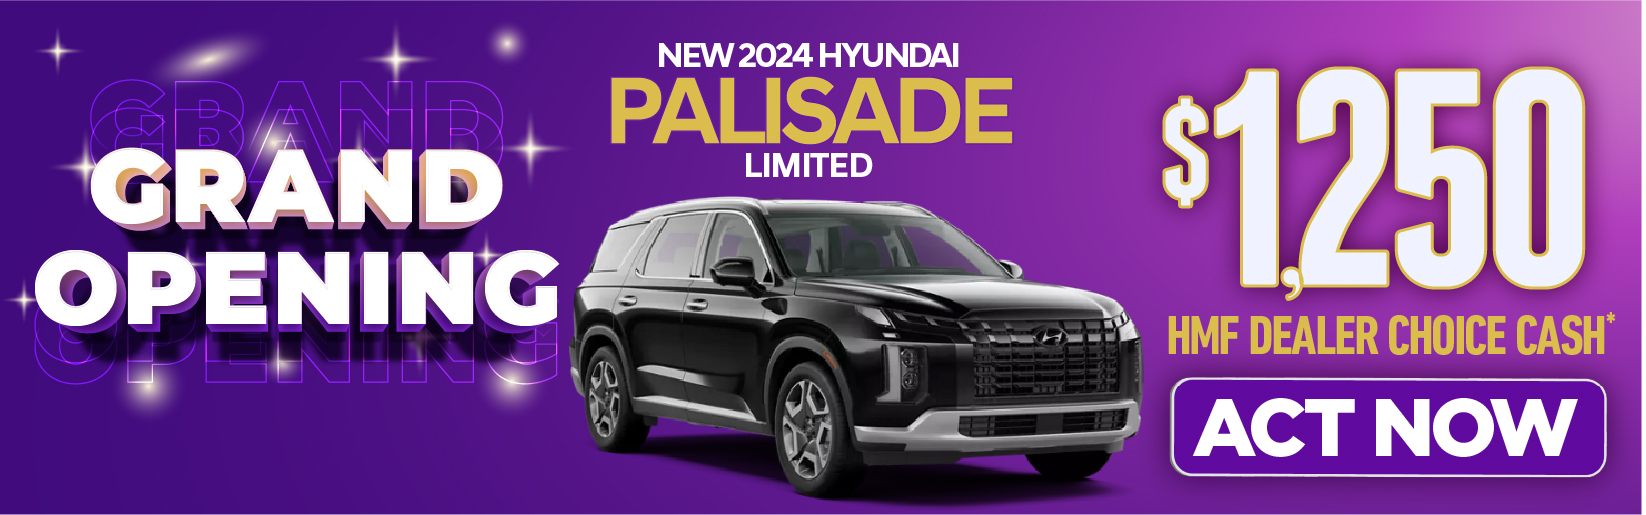 New 2024 Hyundai Palisade Limited - $1,250 HMF Dealer Choice Cash - Act Now